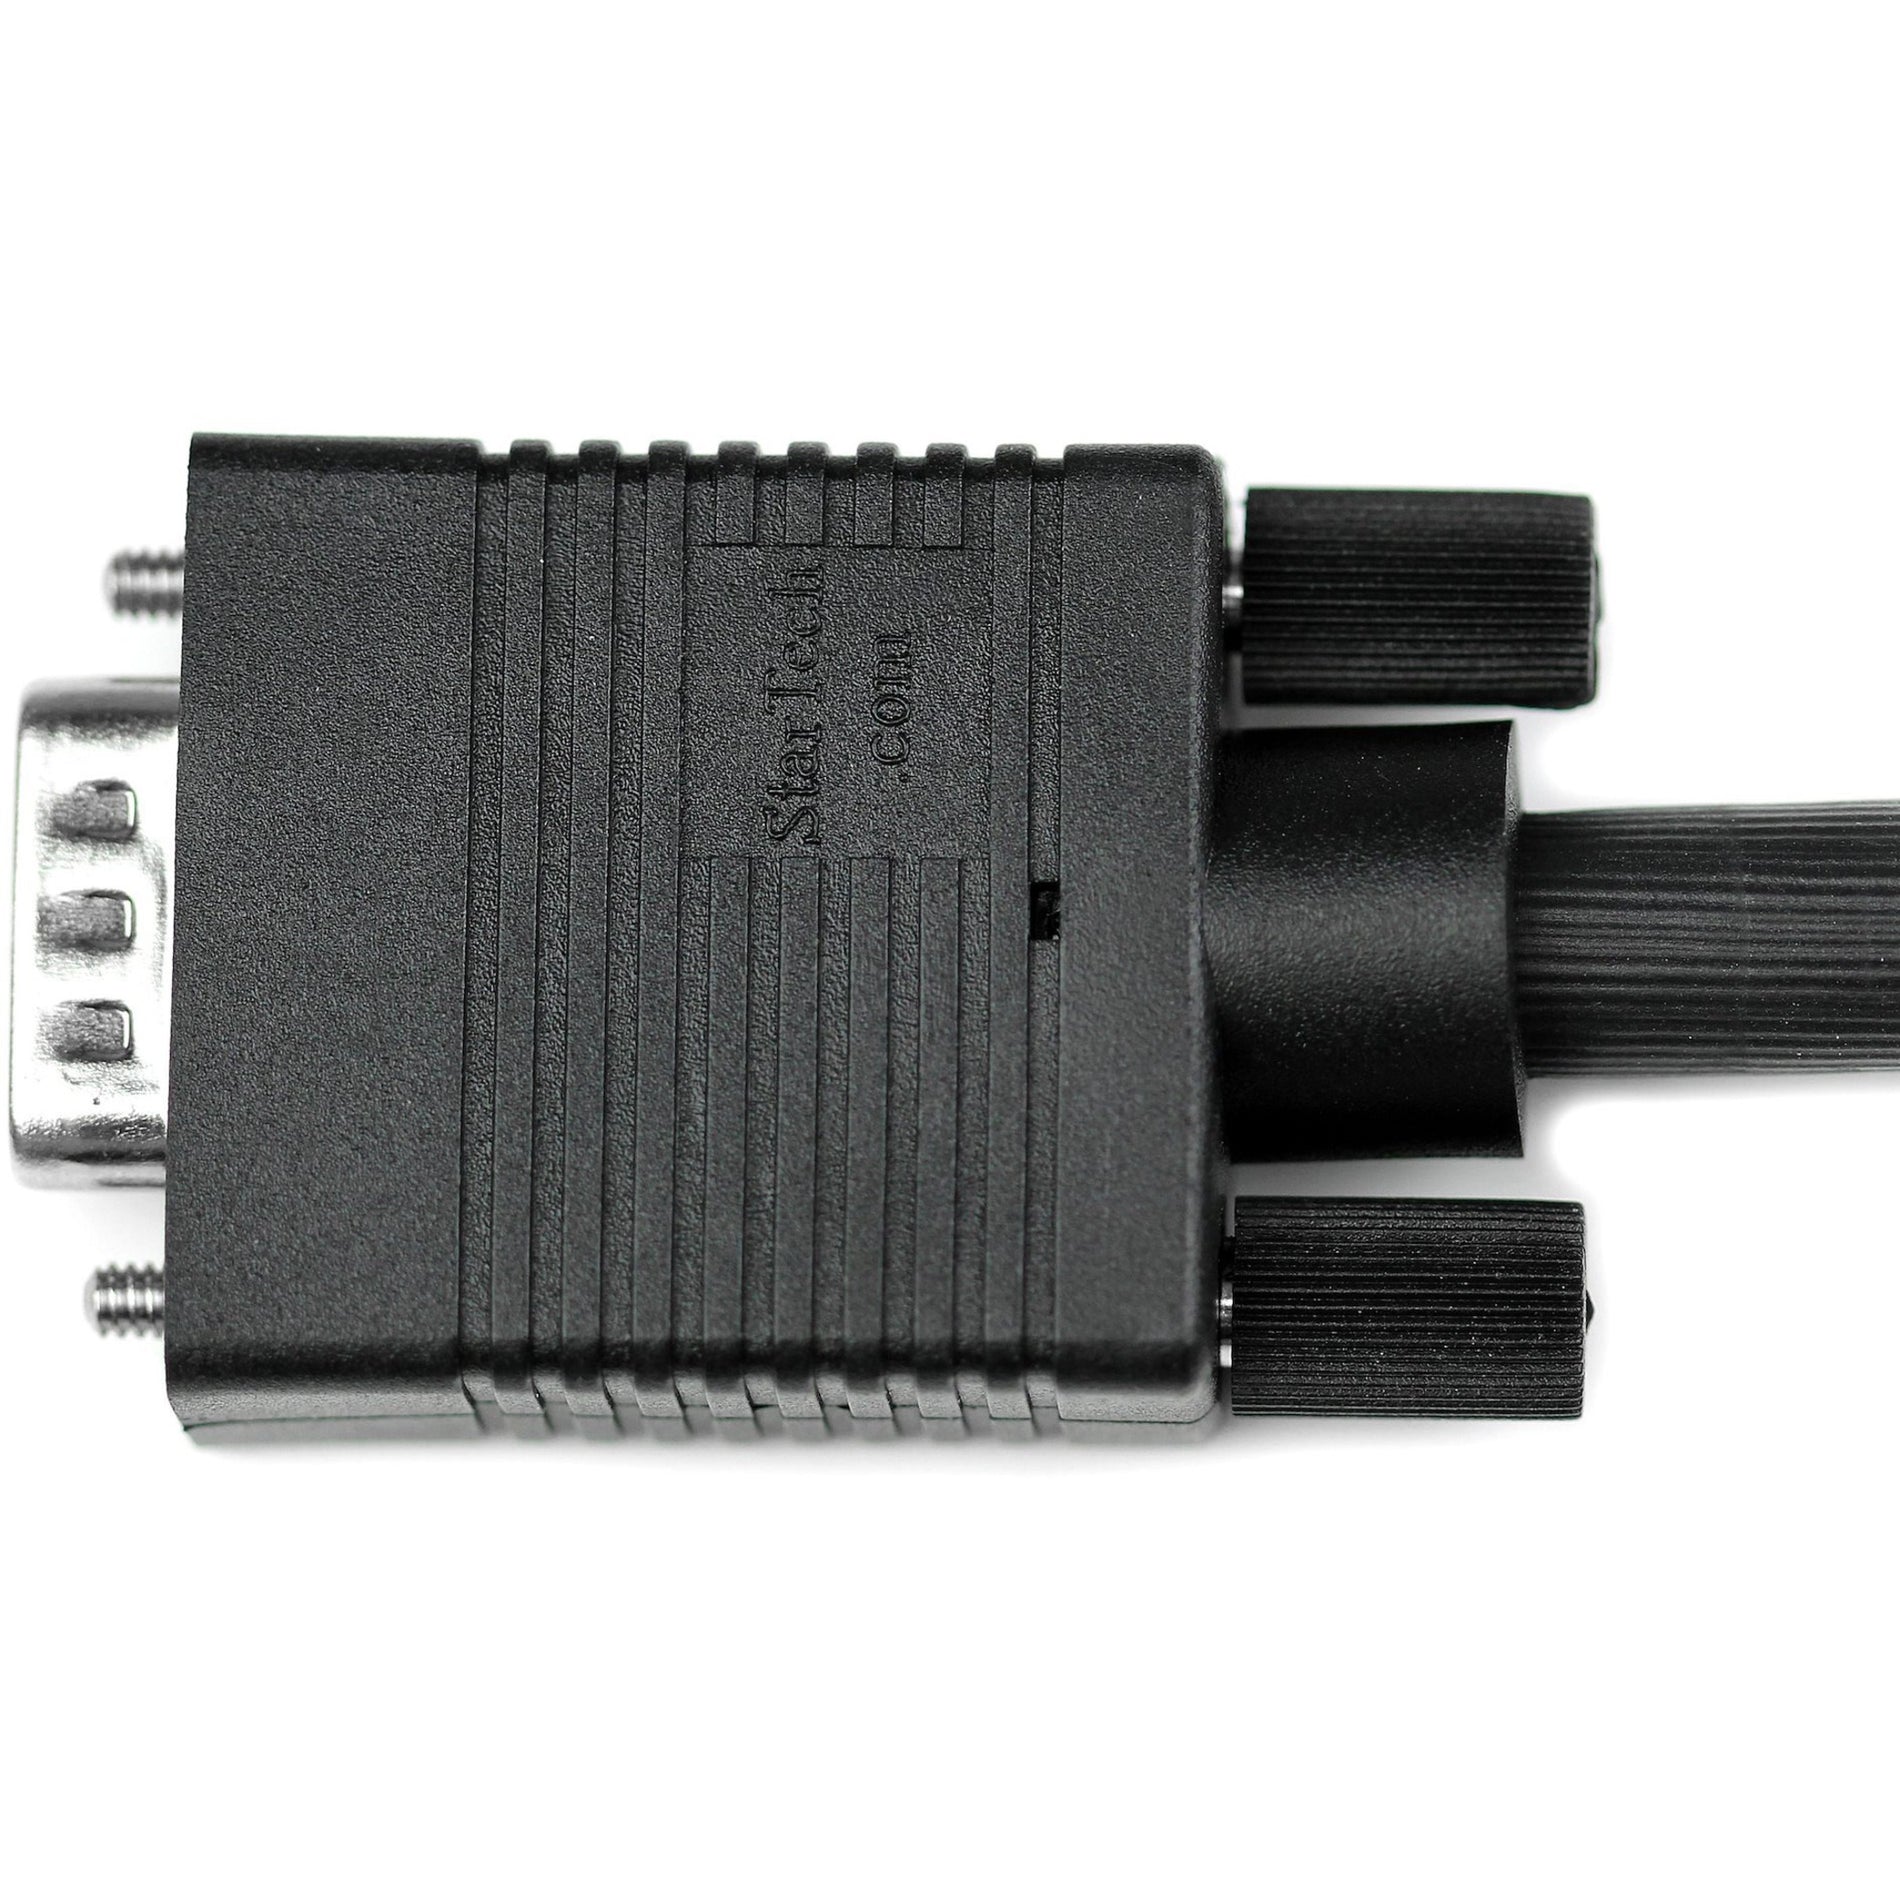 StarTech.com MXT101MMHQ10 10ft كابل شاشة VGA عالية الدقة HD15 ذكر إلى ذكر، مصبوب، حماية EMI، 1920 x 1200، أسود